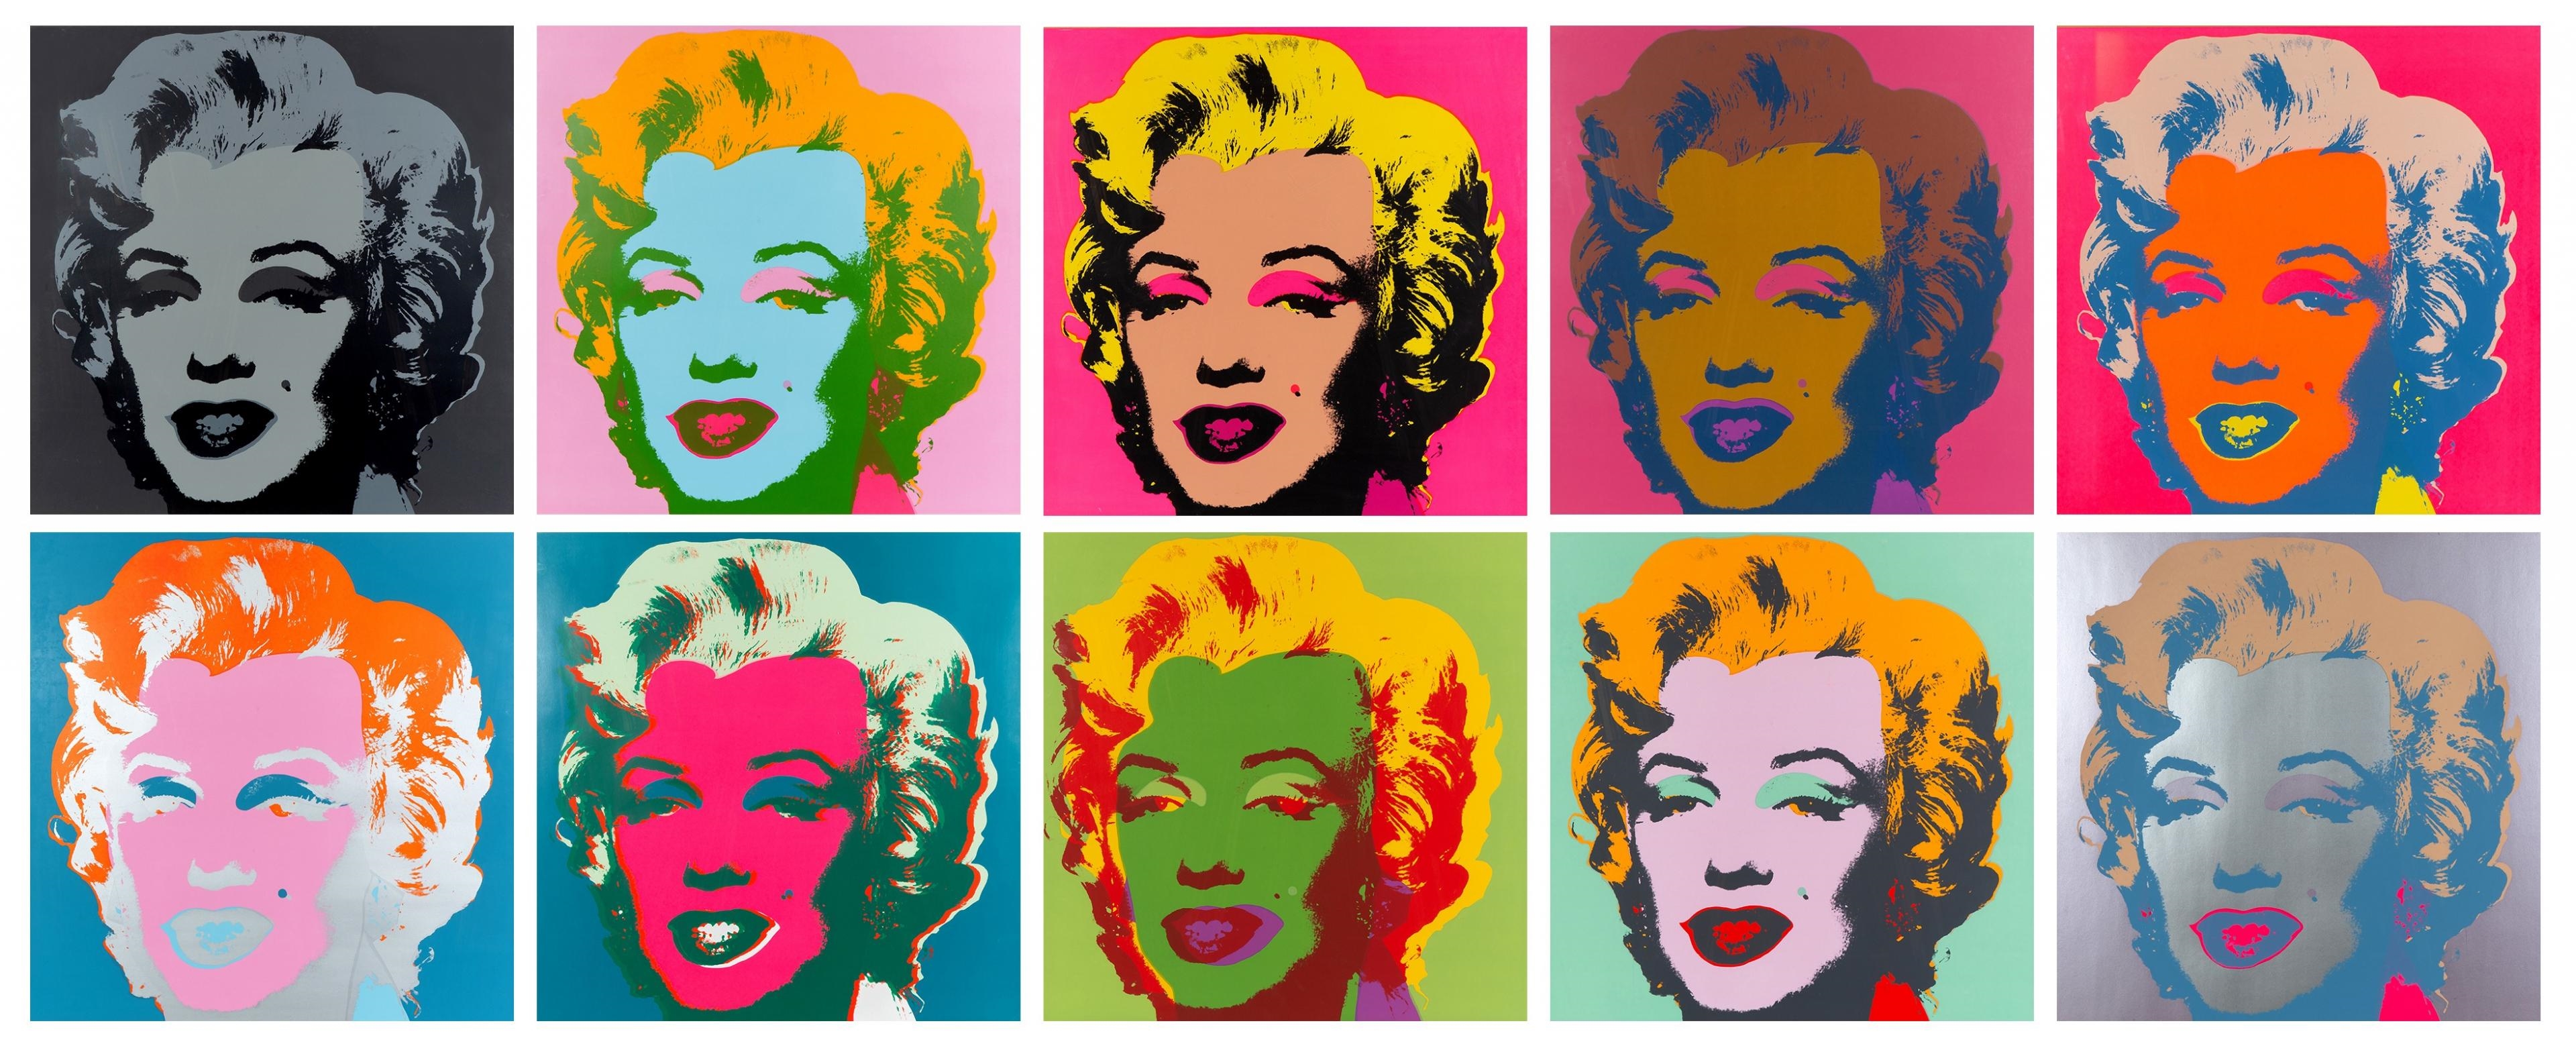 Andy Warhol | 10 Works: Marilyn Monroe | MutualArt